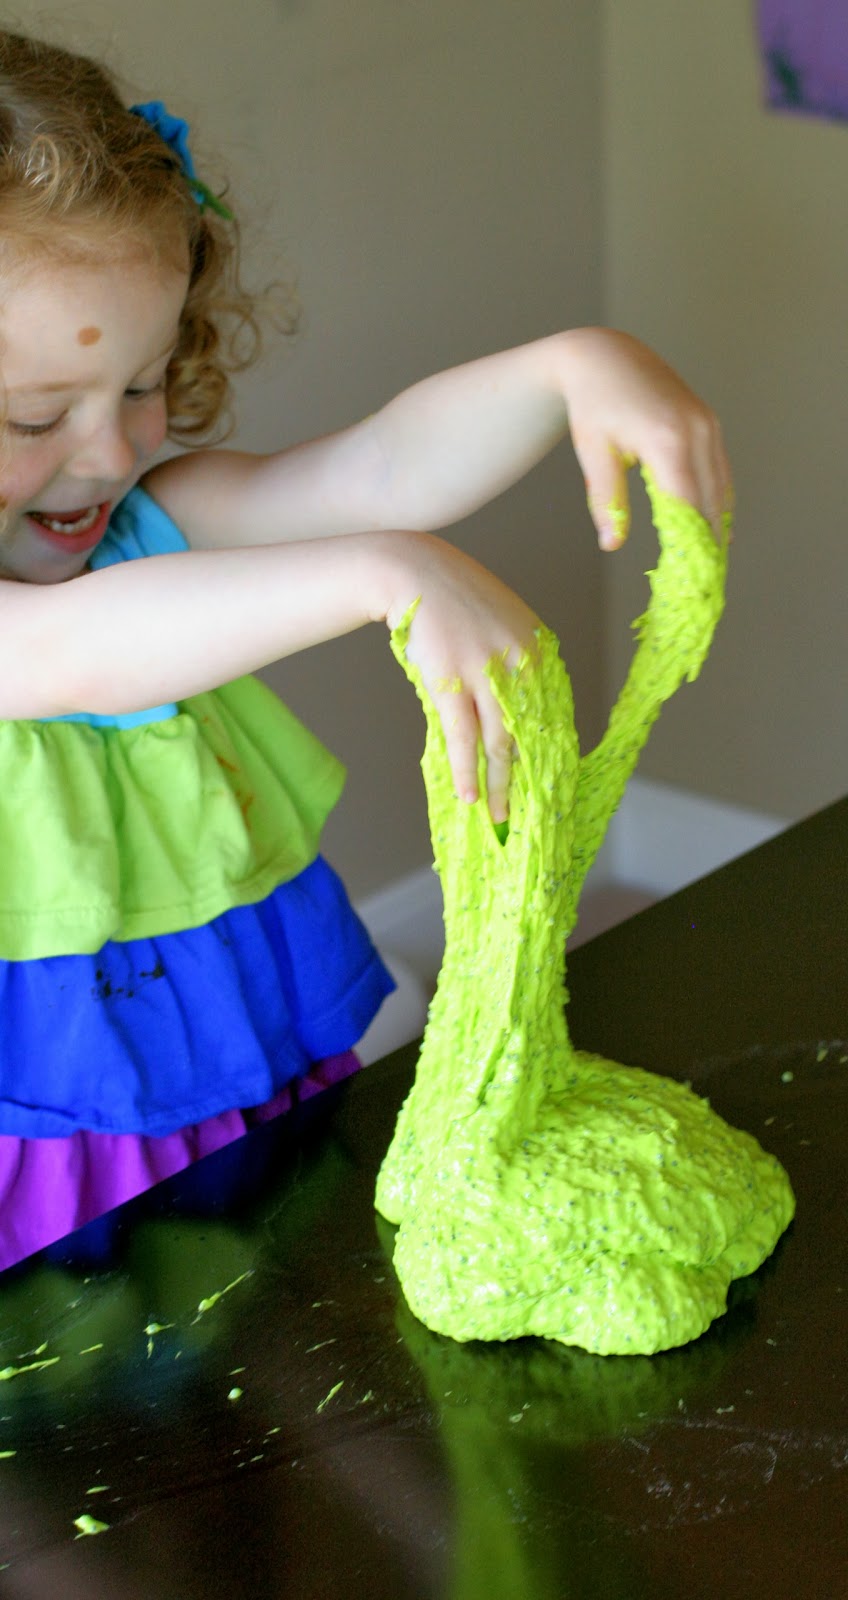 DIY edible slime for Halloween (via www.funathomewithkids.com)